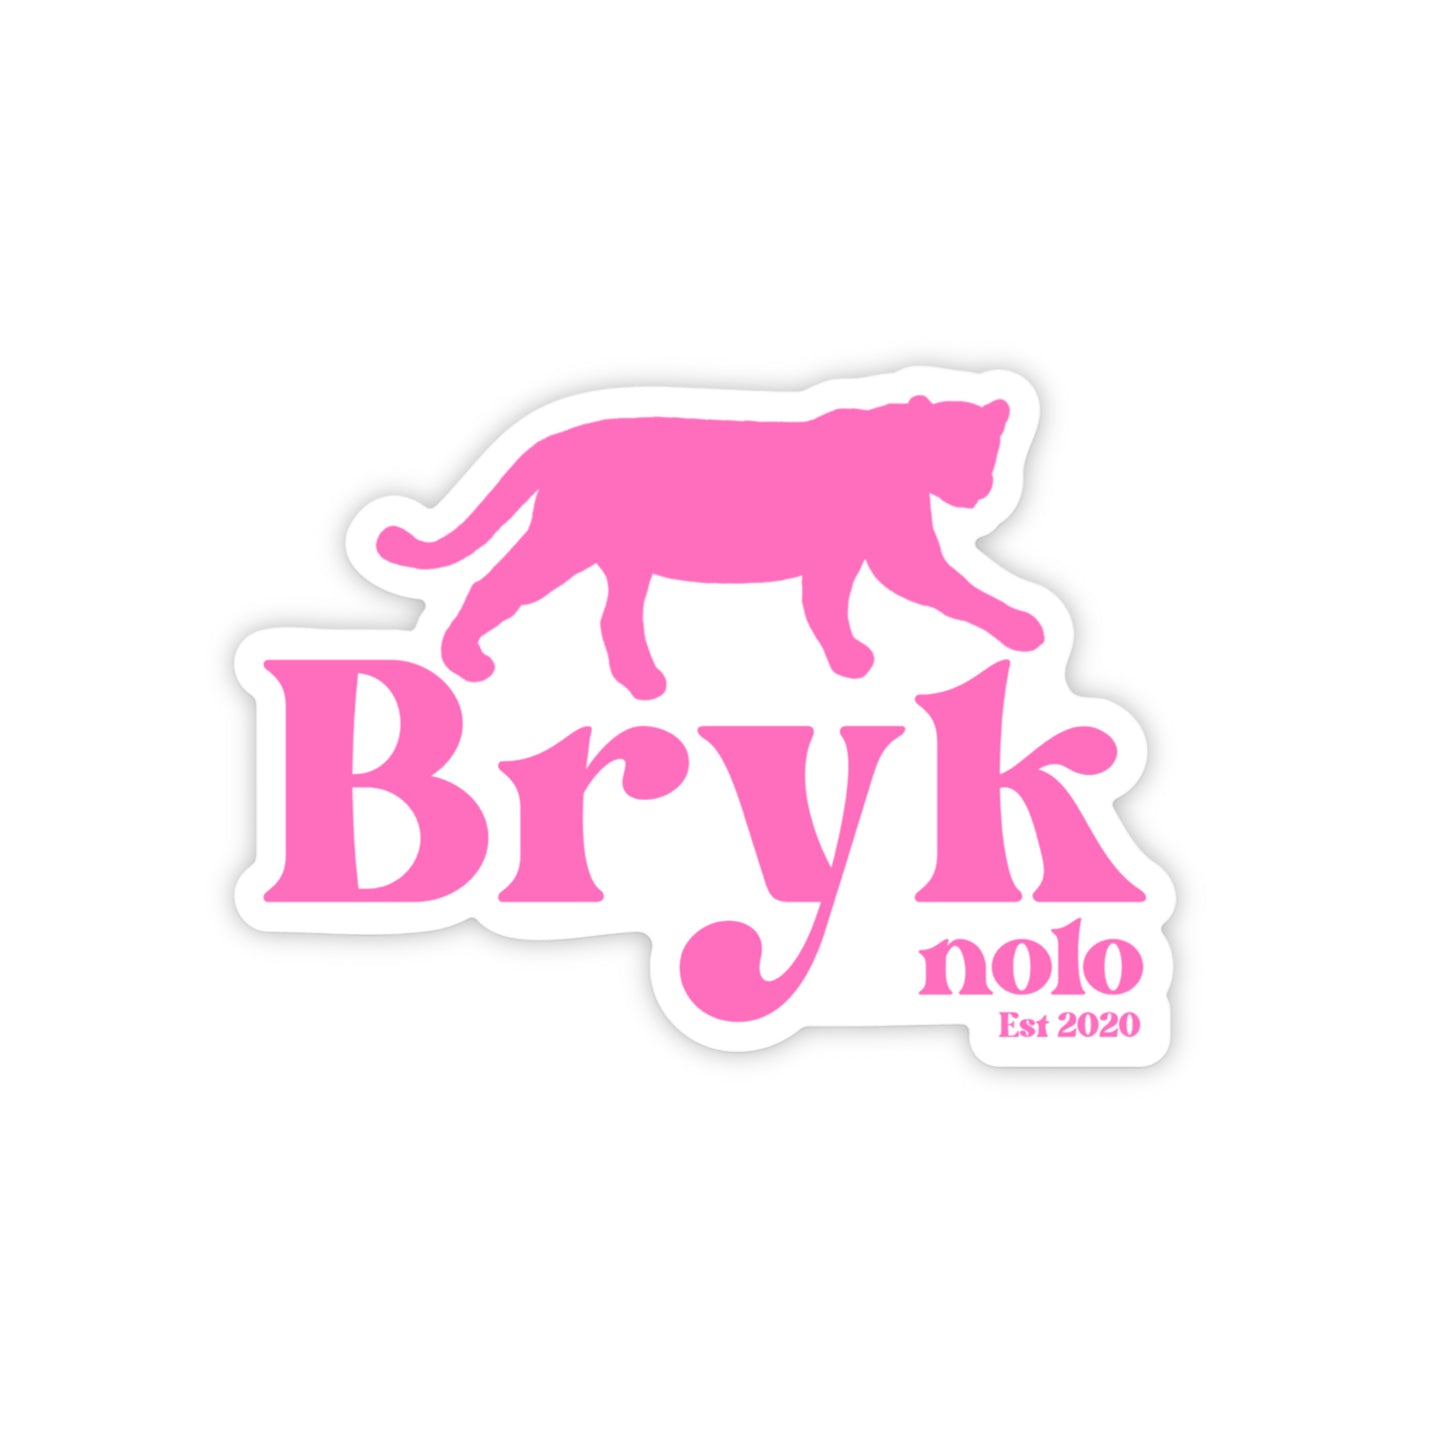 BRYK LOGO PINK STICKER - BRYKNOLO LLC